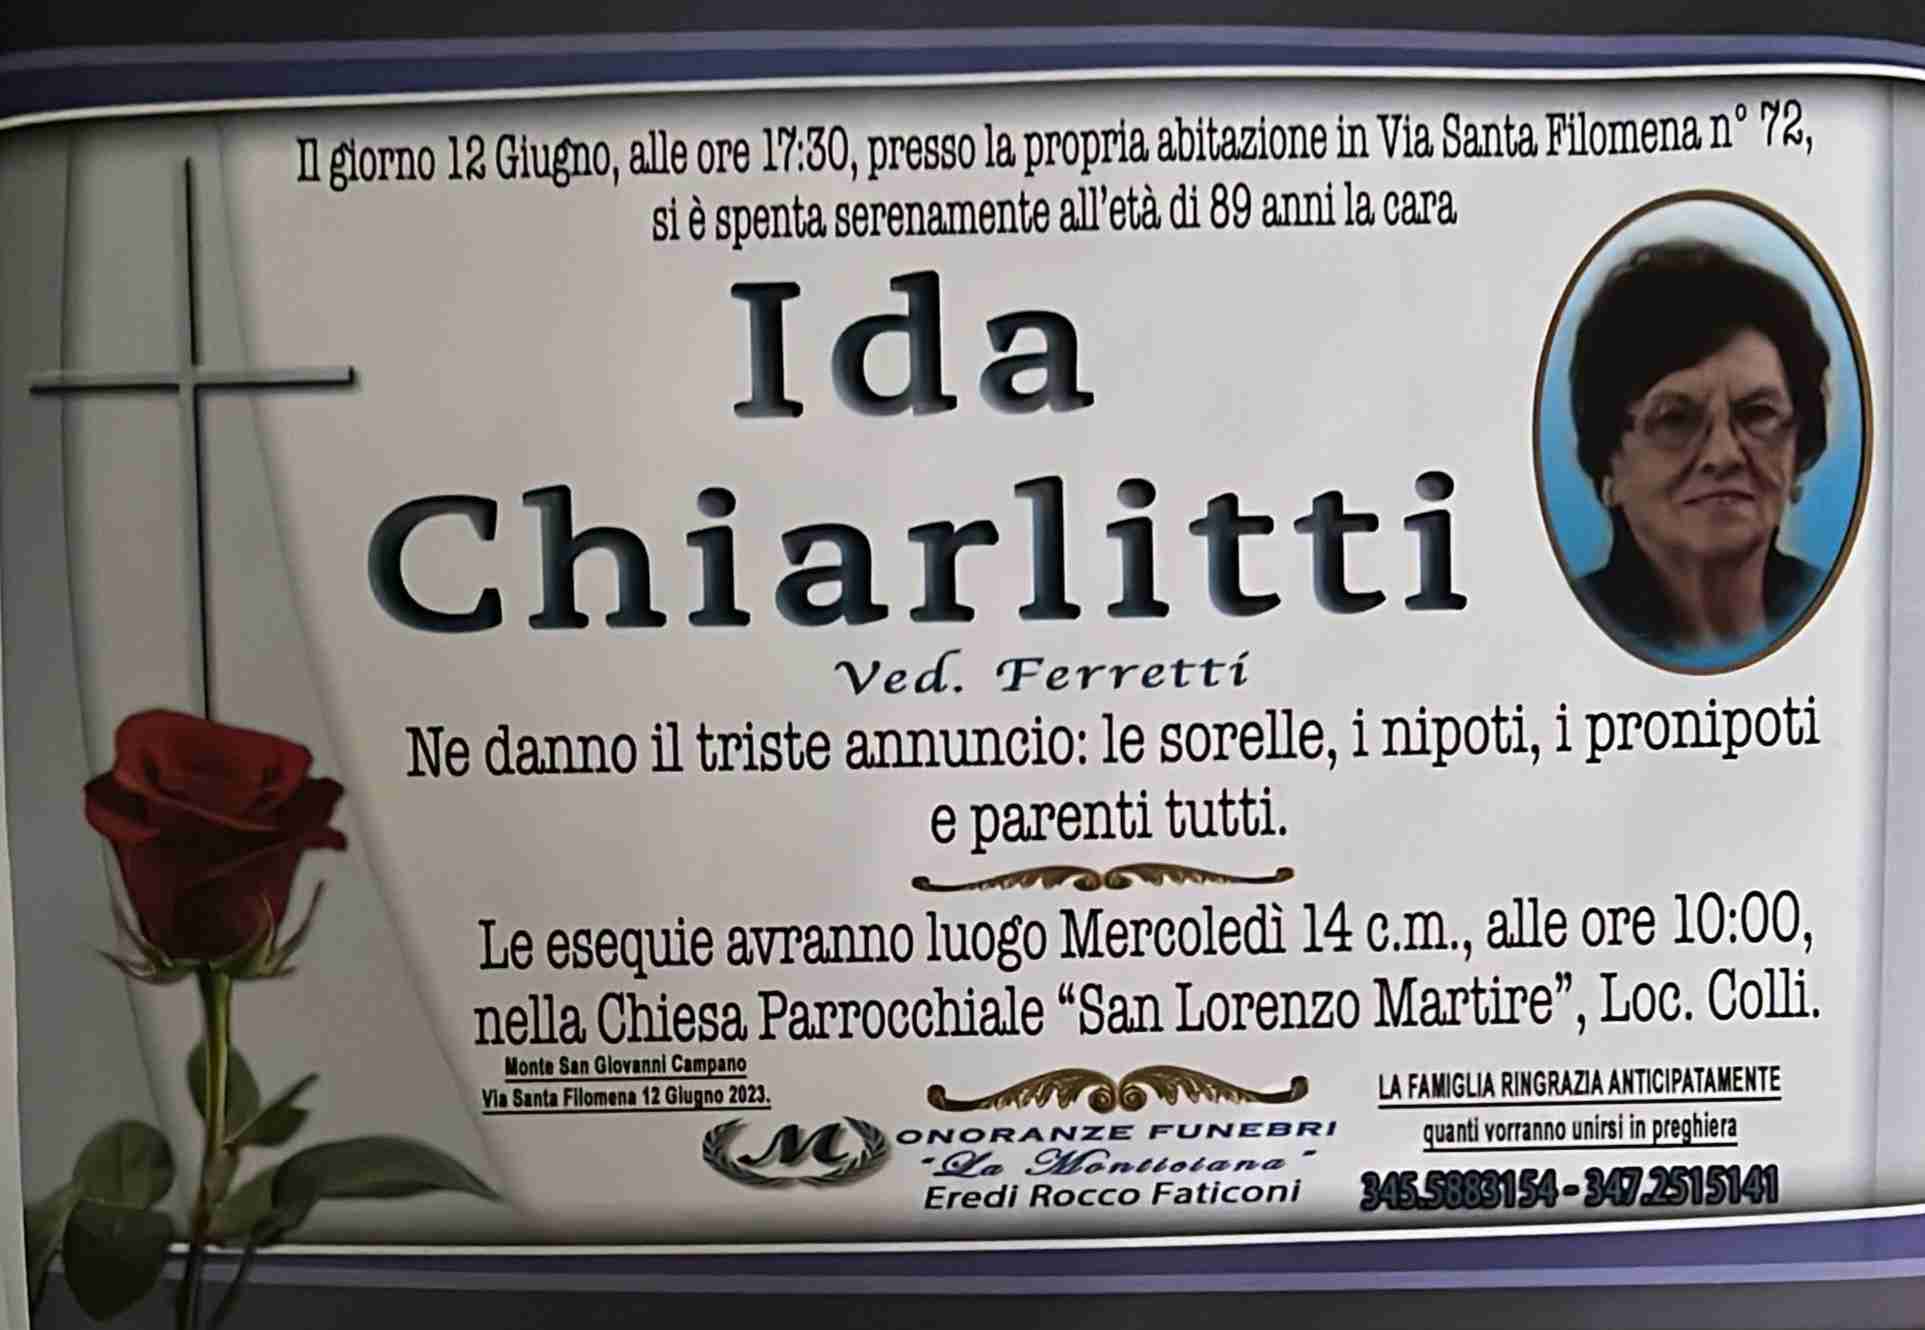 Ida Chiarlitti